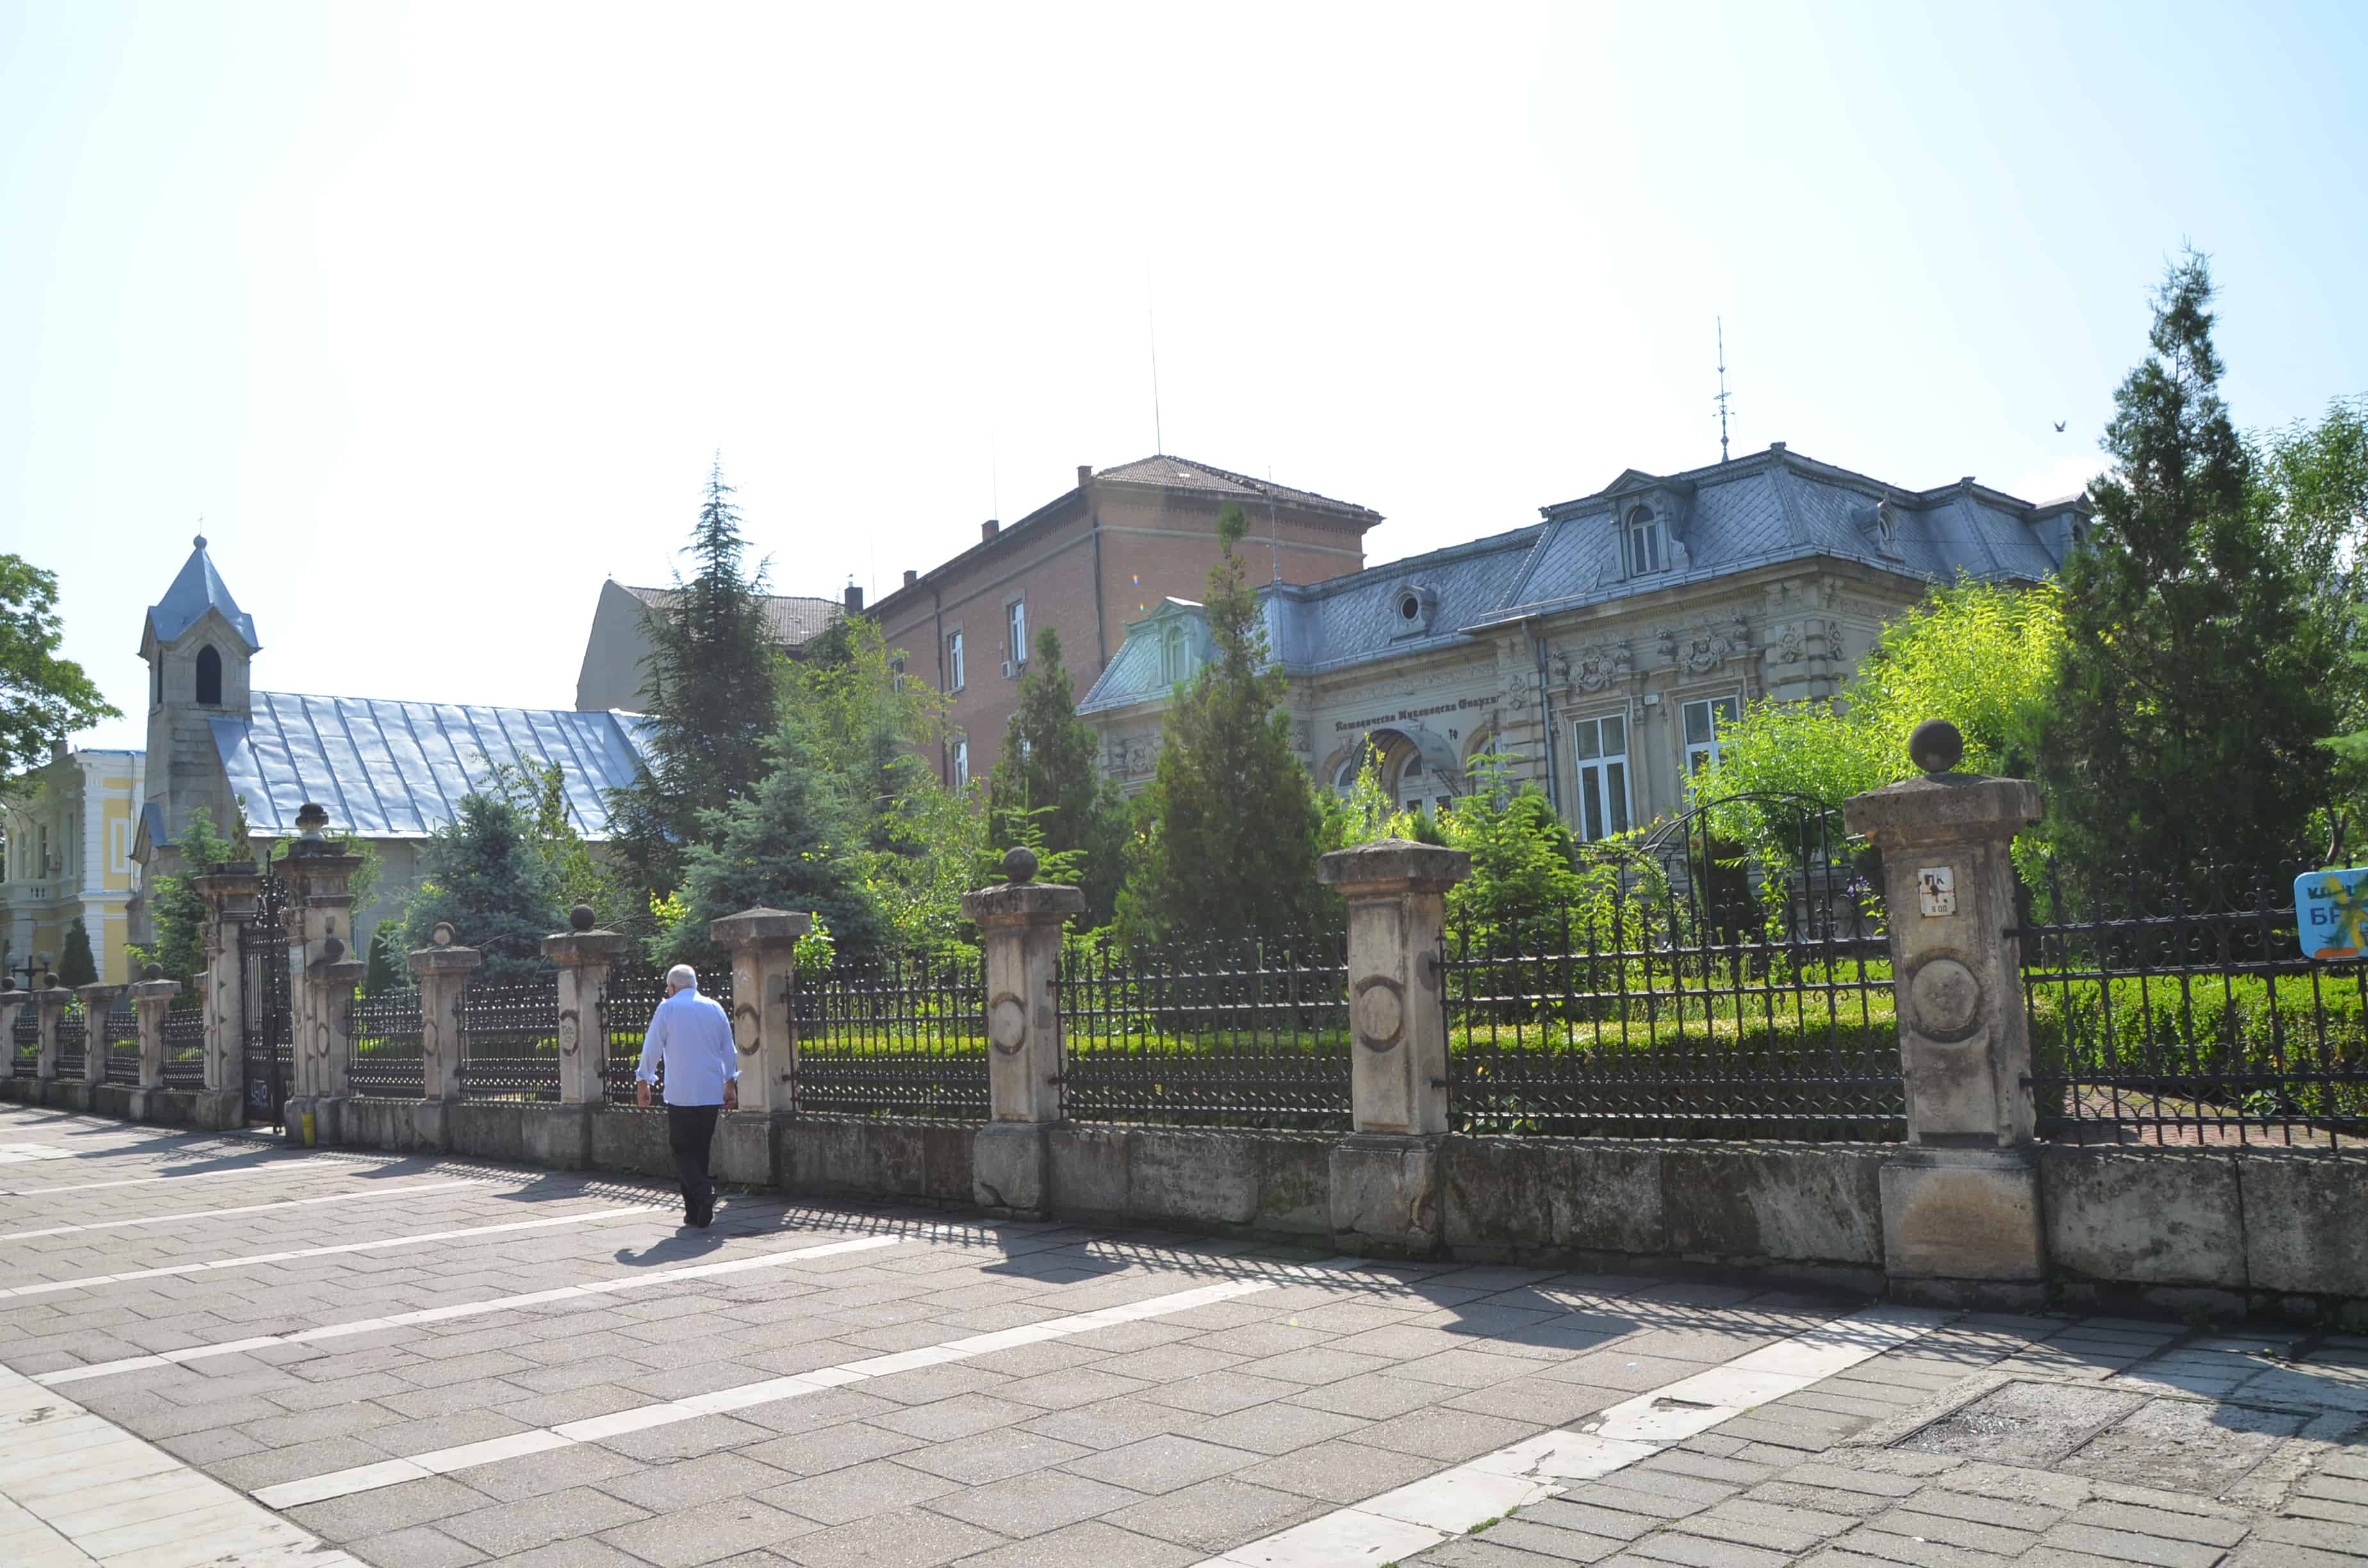 Catholic Archbishop's Palace on Doctor Mustakov Square in Ruse, Bulgaria